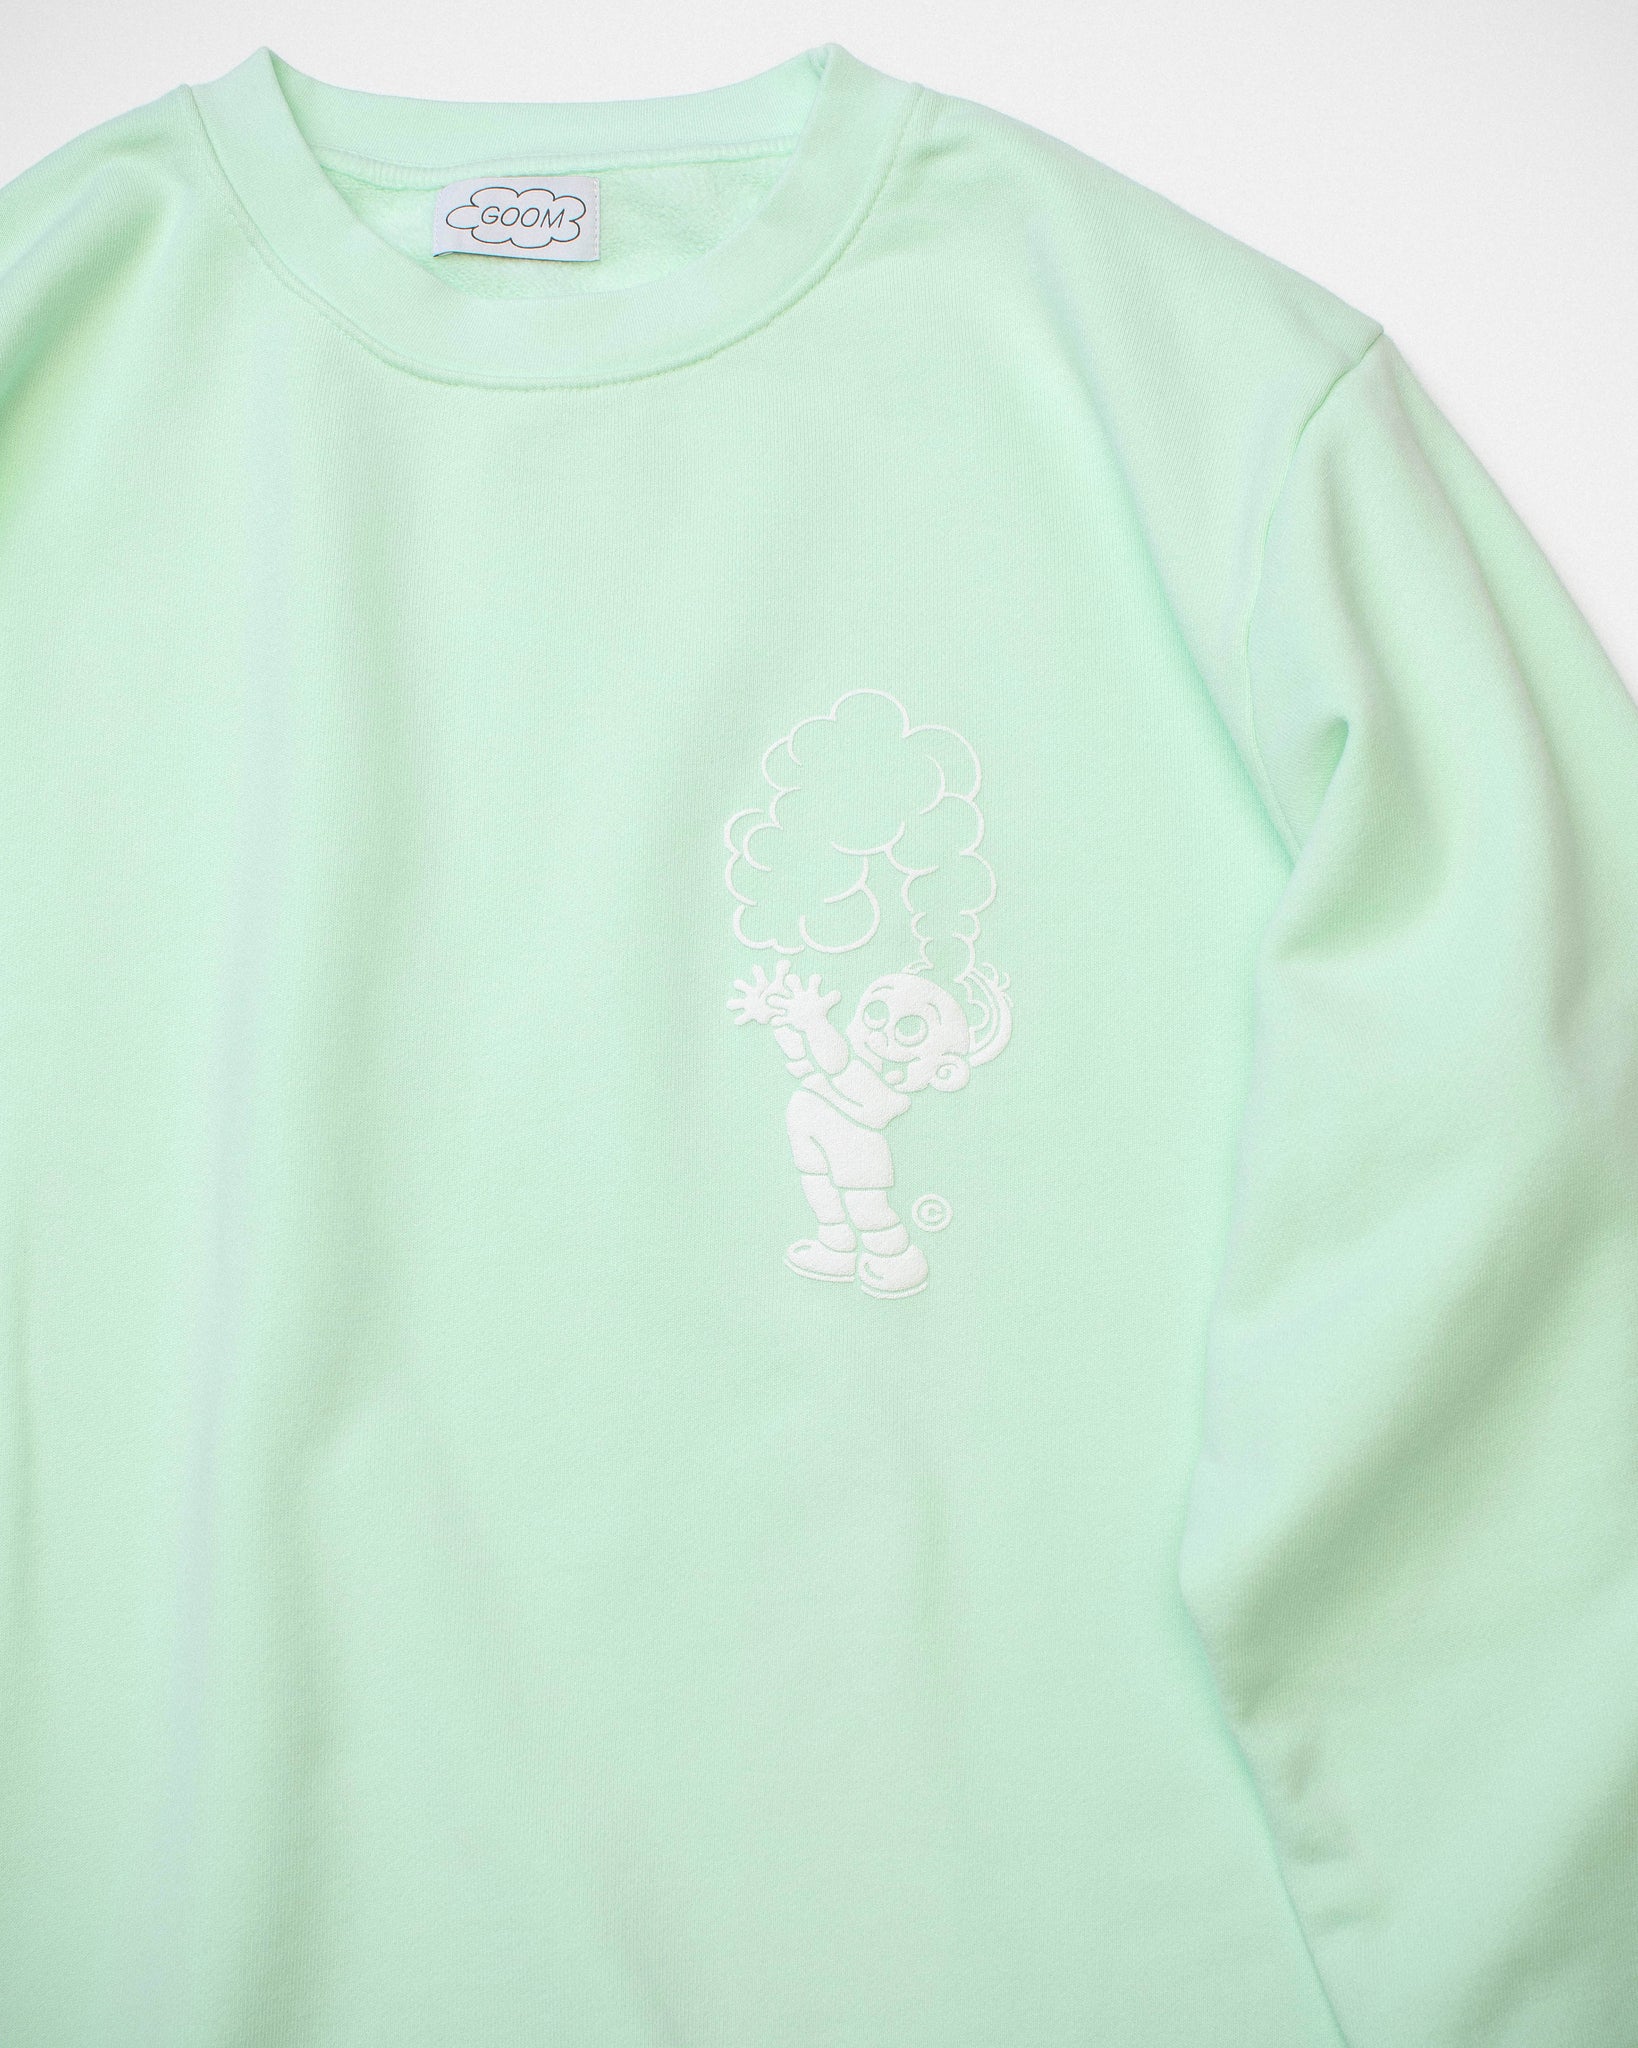 Cloudhead Sweatshirt - Light Mint